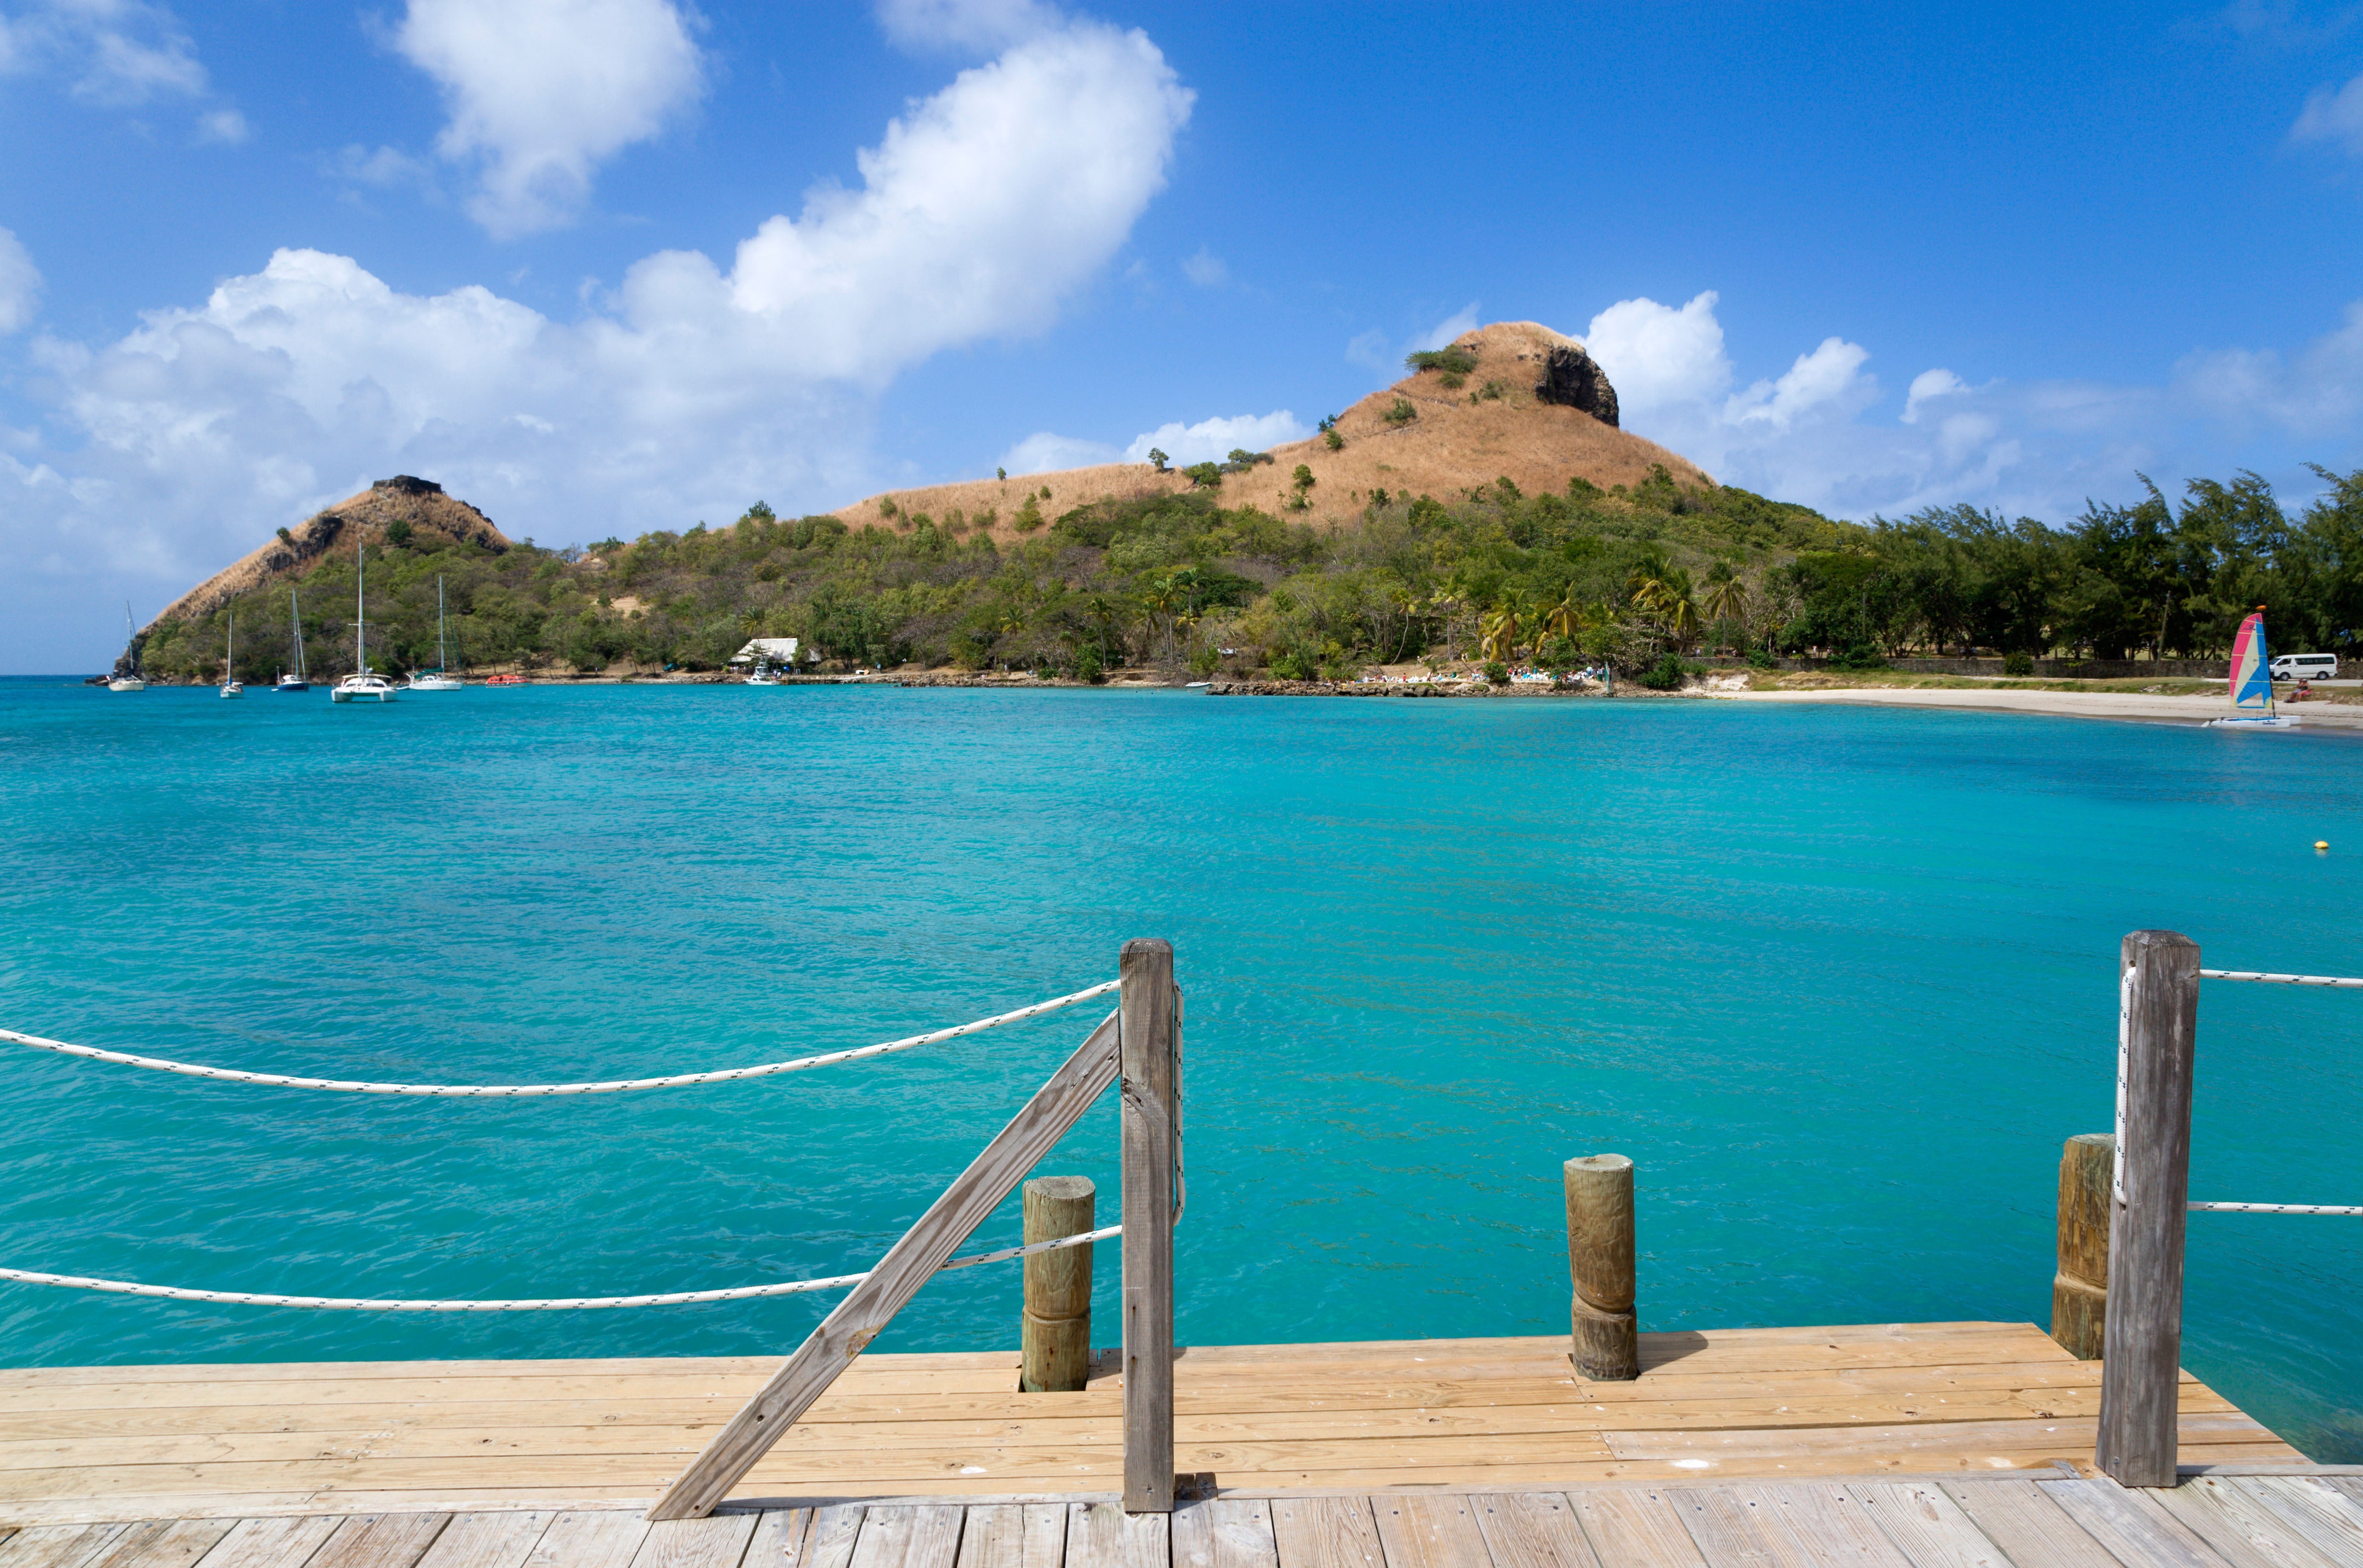 Enjoy mountain views from the beach, or beach views from the mountains on an unforgetttable visit to Saint Lucia